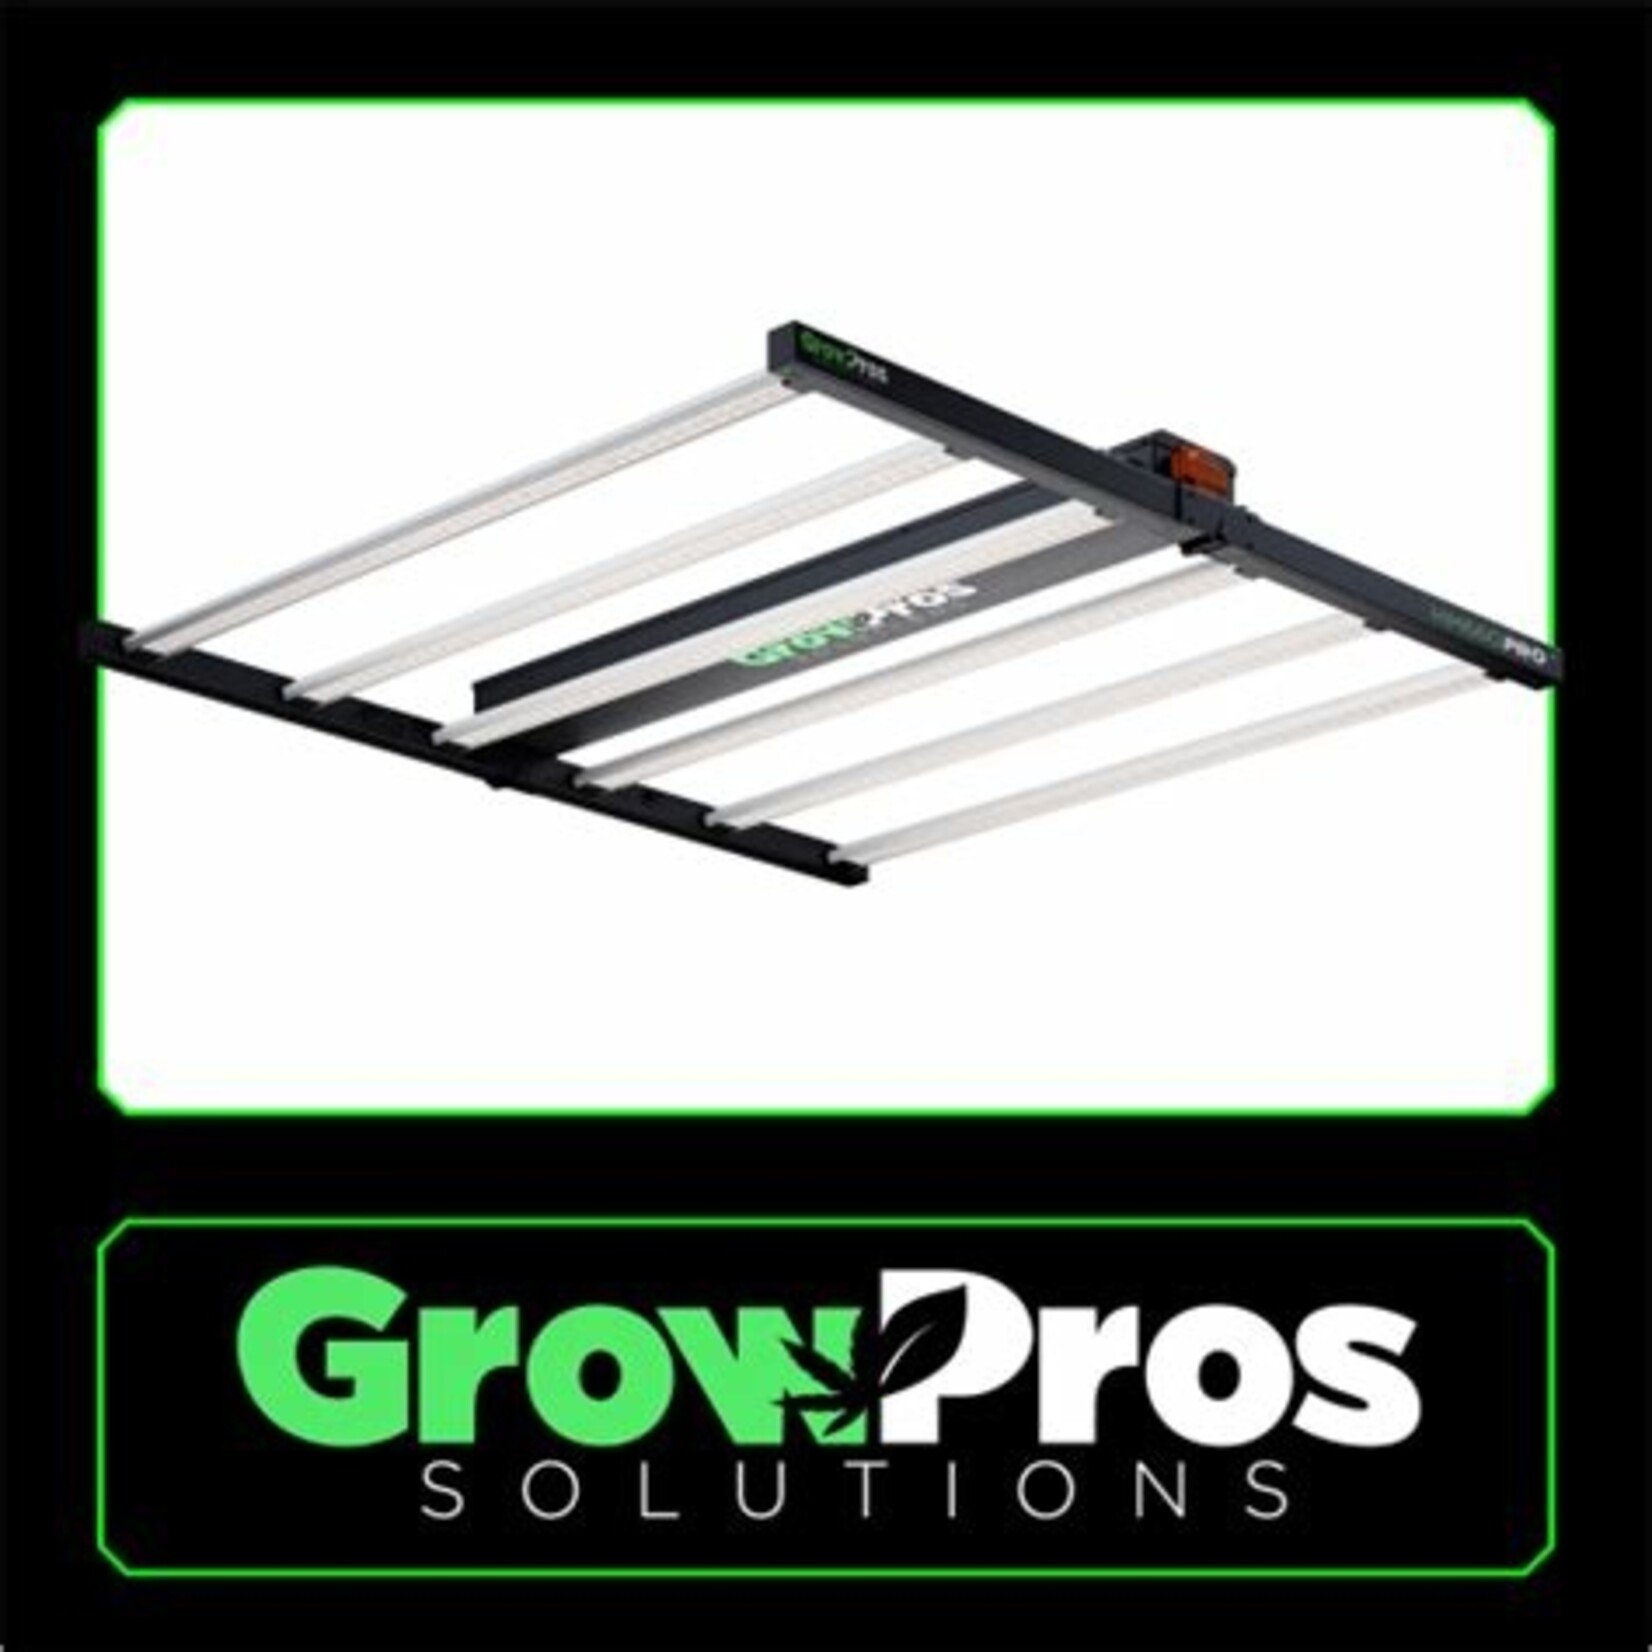 GrowPros Solutions GrowPros HM660 Series LED Grow Light